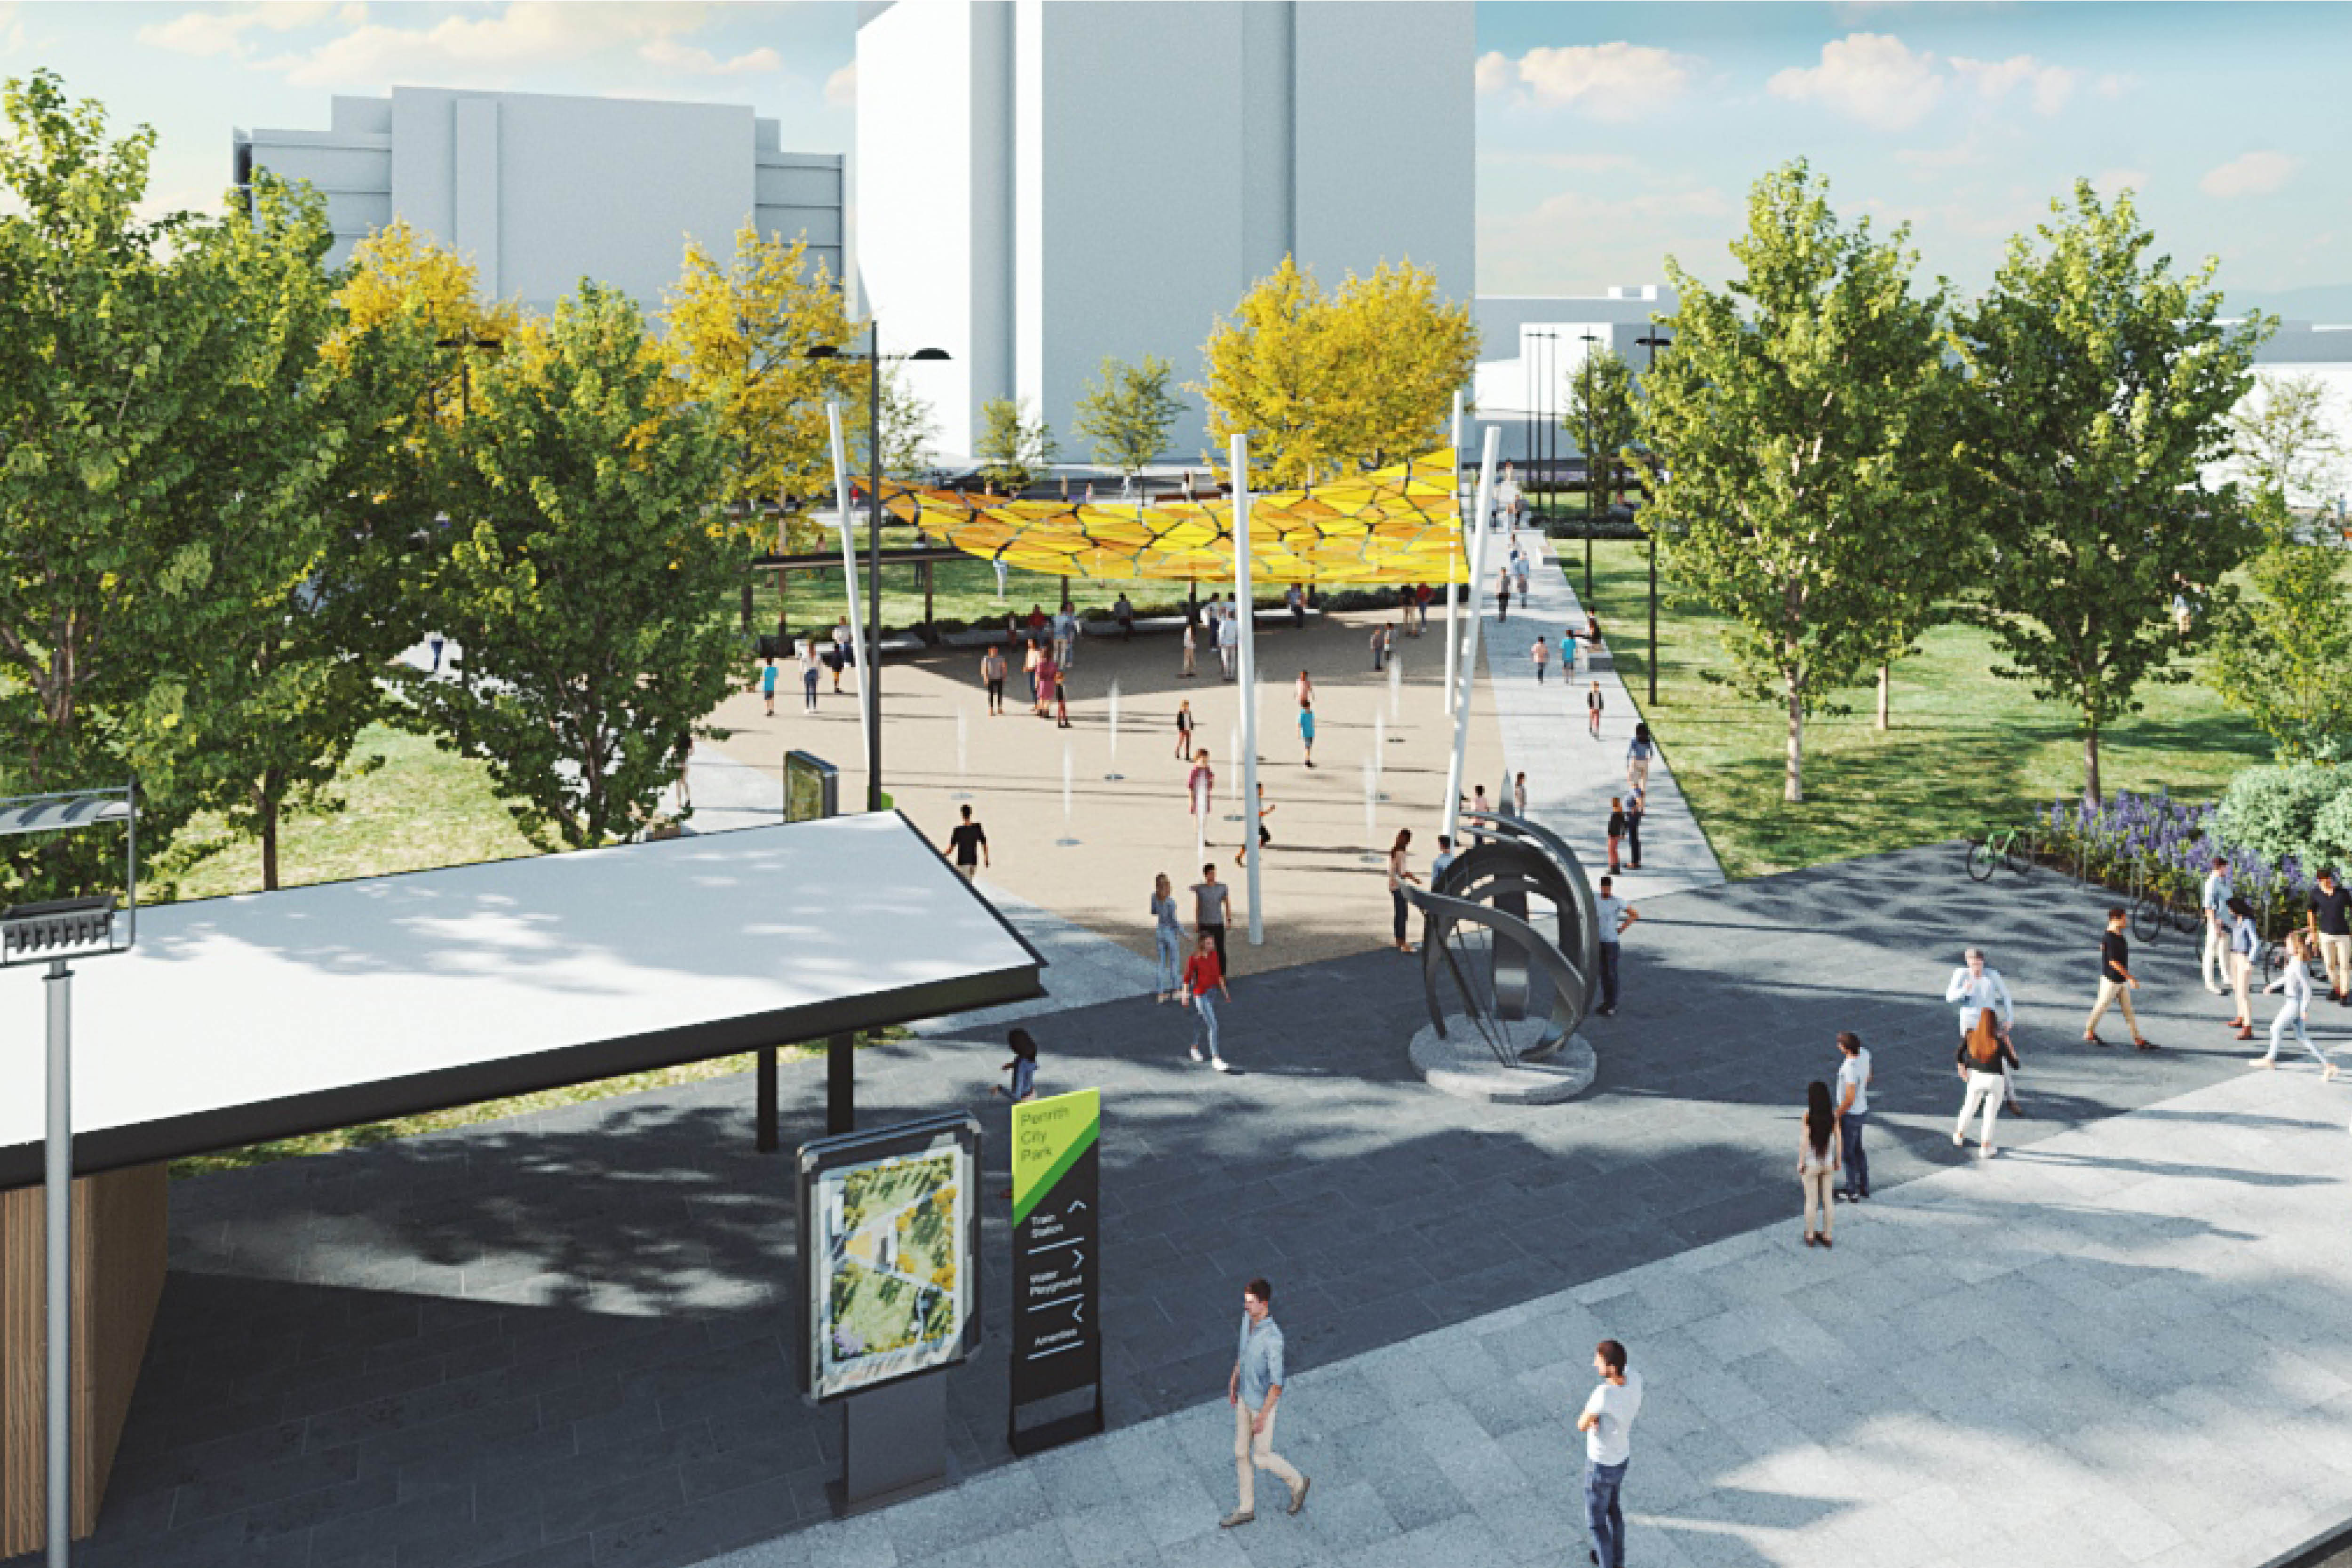 Artist impression of the proposed City Park development